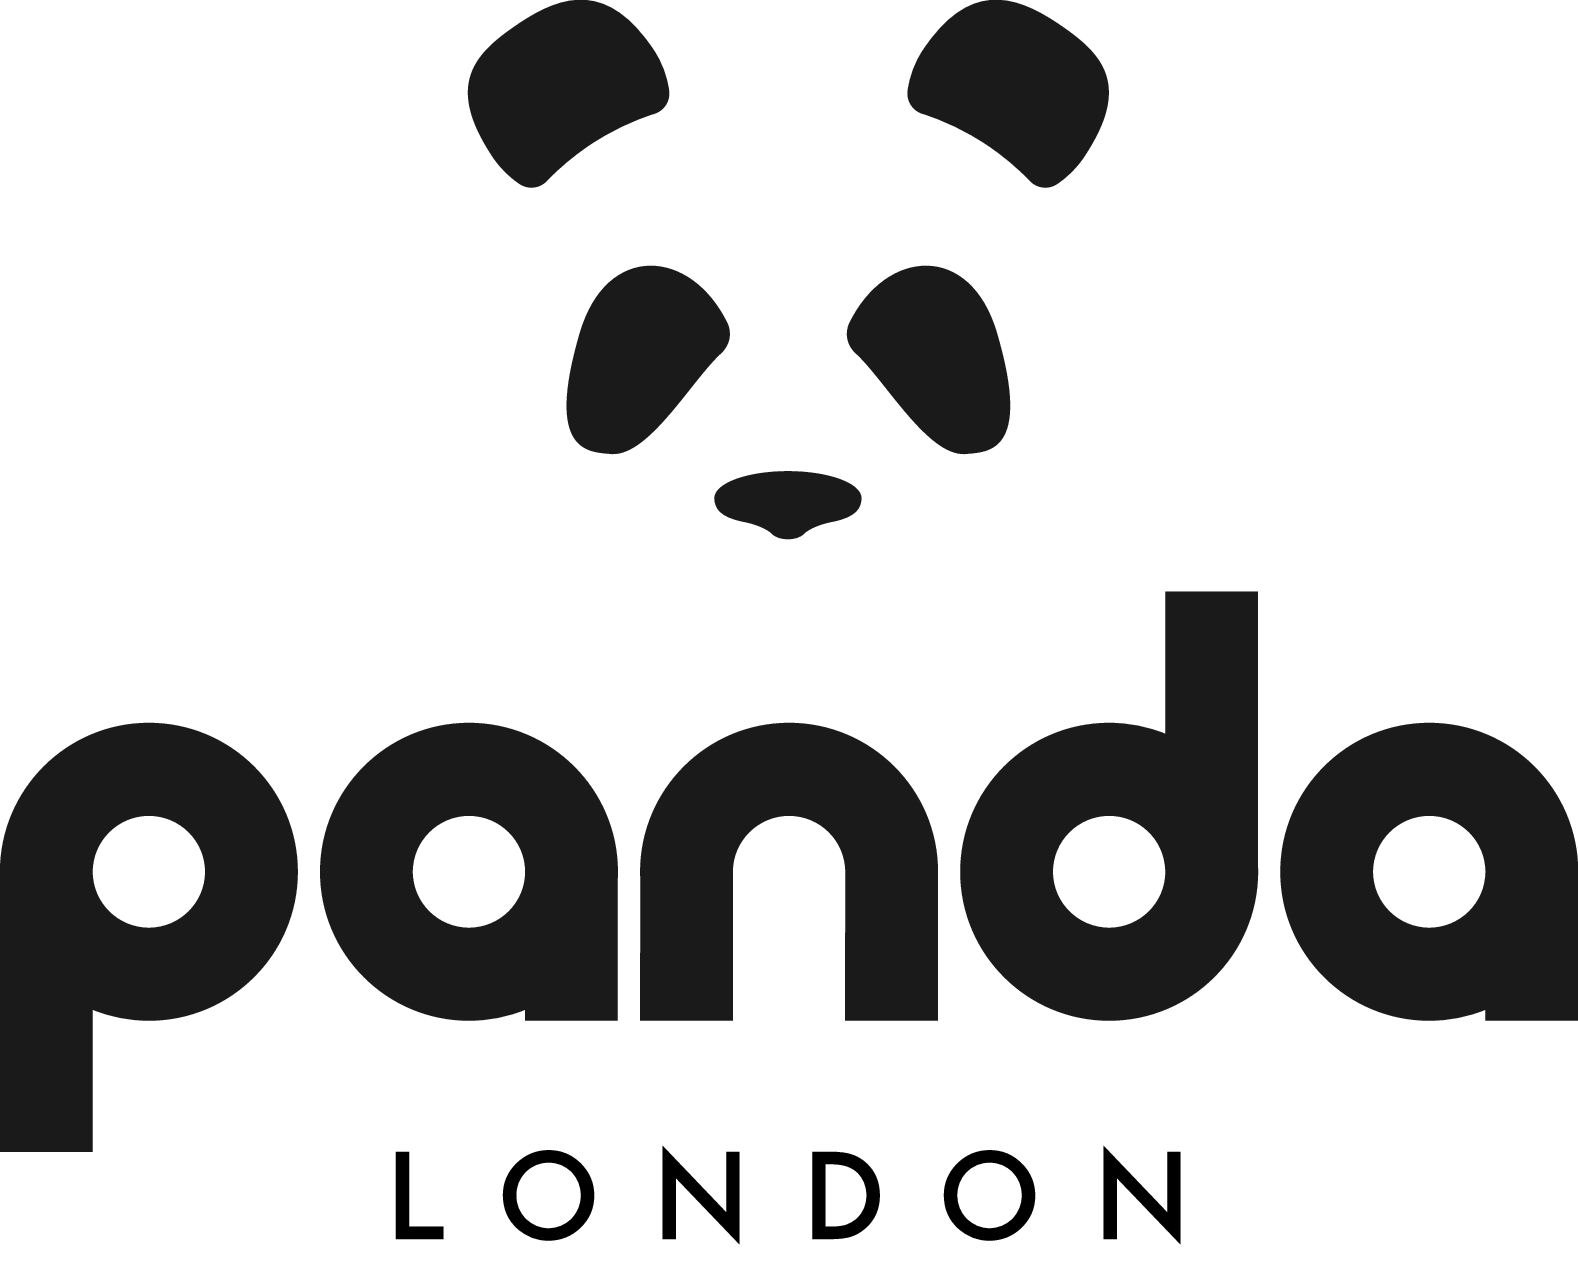 Panda London kody promocyjne 